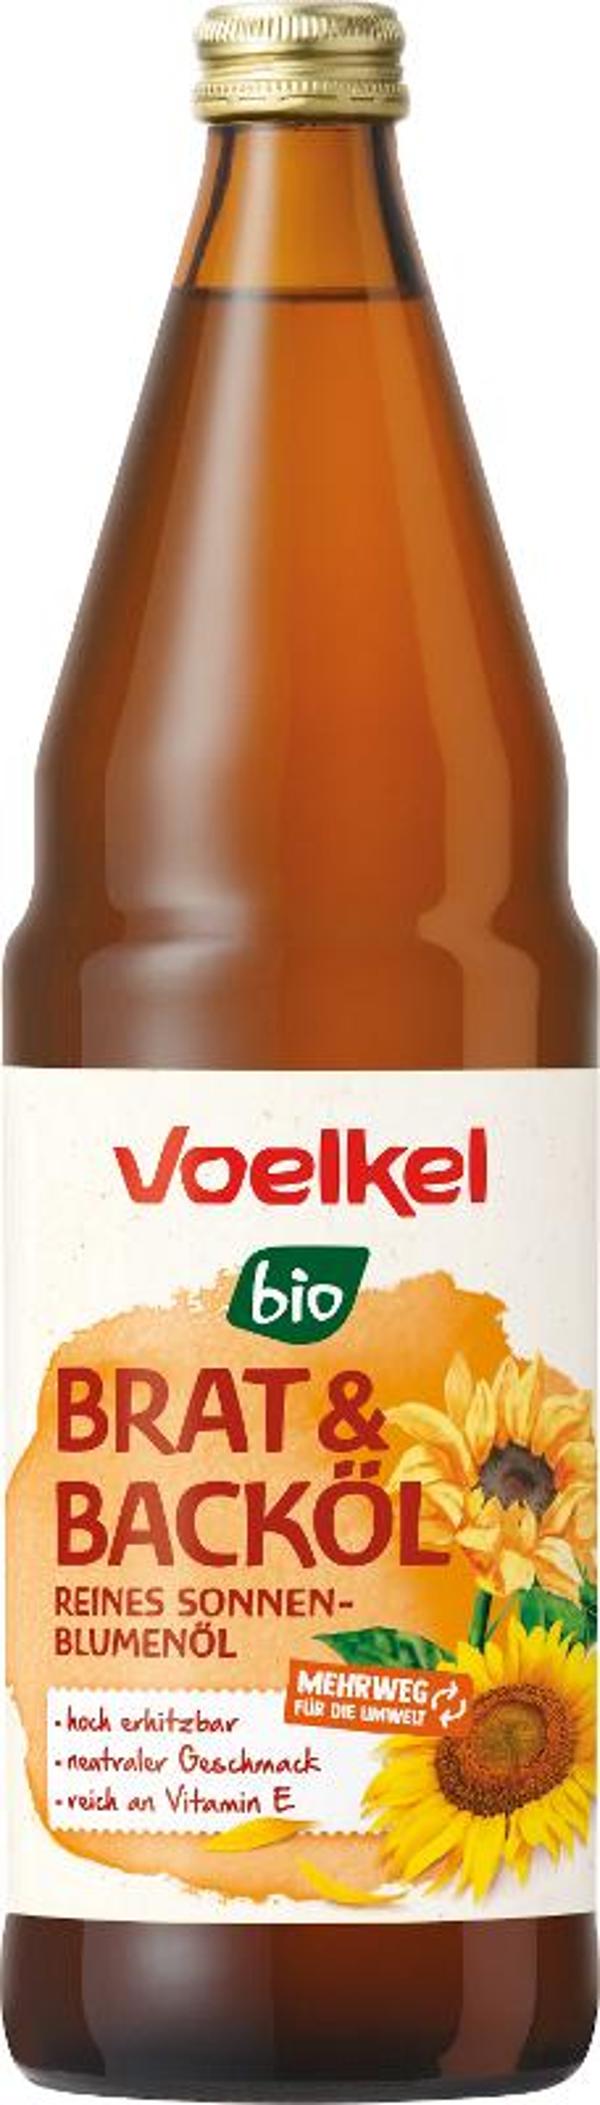 Produktfoto zu Voelkel Brat & Backöl 0,75 l